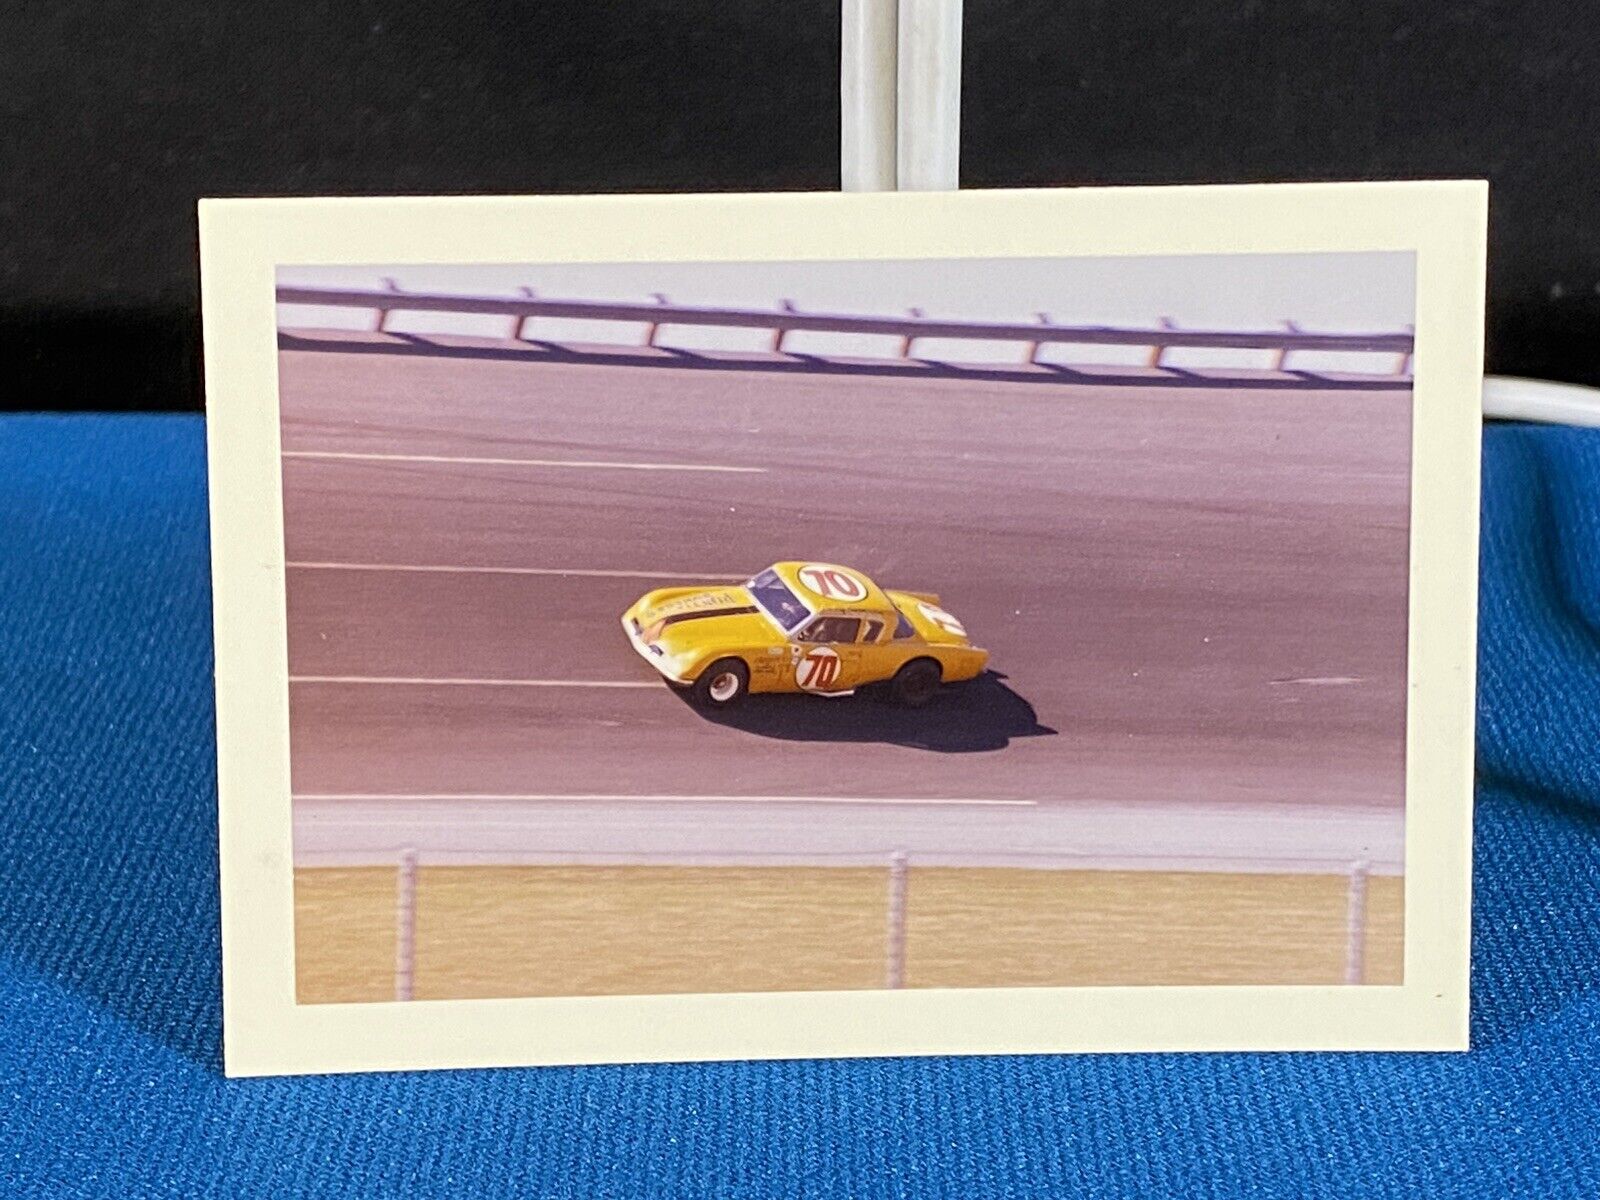 LeeRoy Yarbrough #70 Race Car Vtg Original Daytona 500 1964 Photo NASCAR (Lt#88)